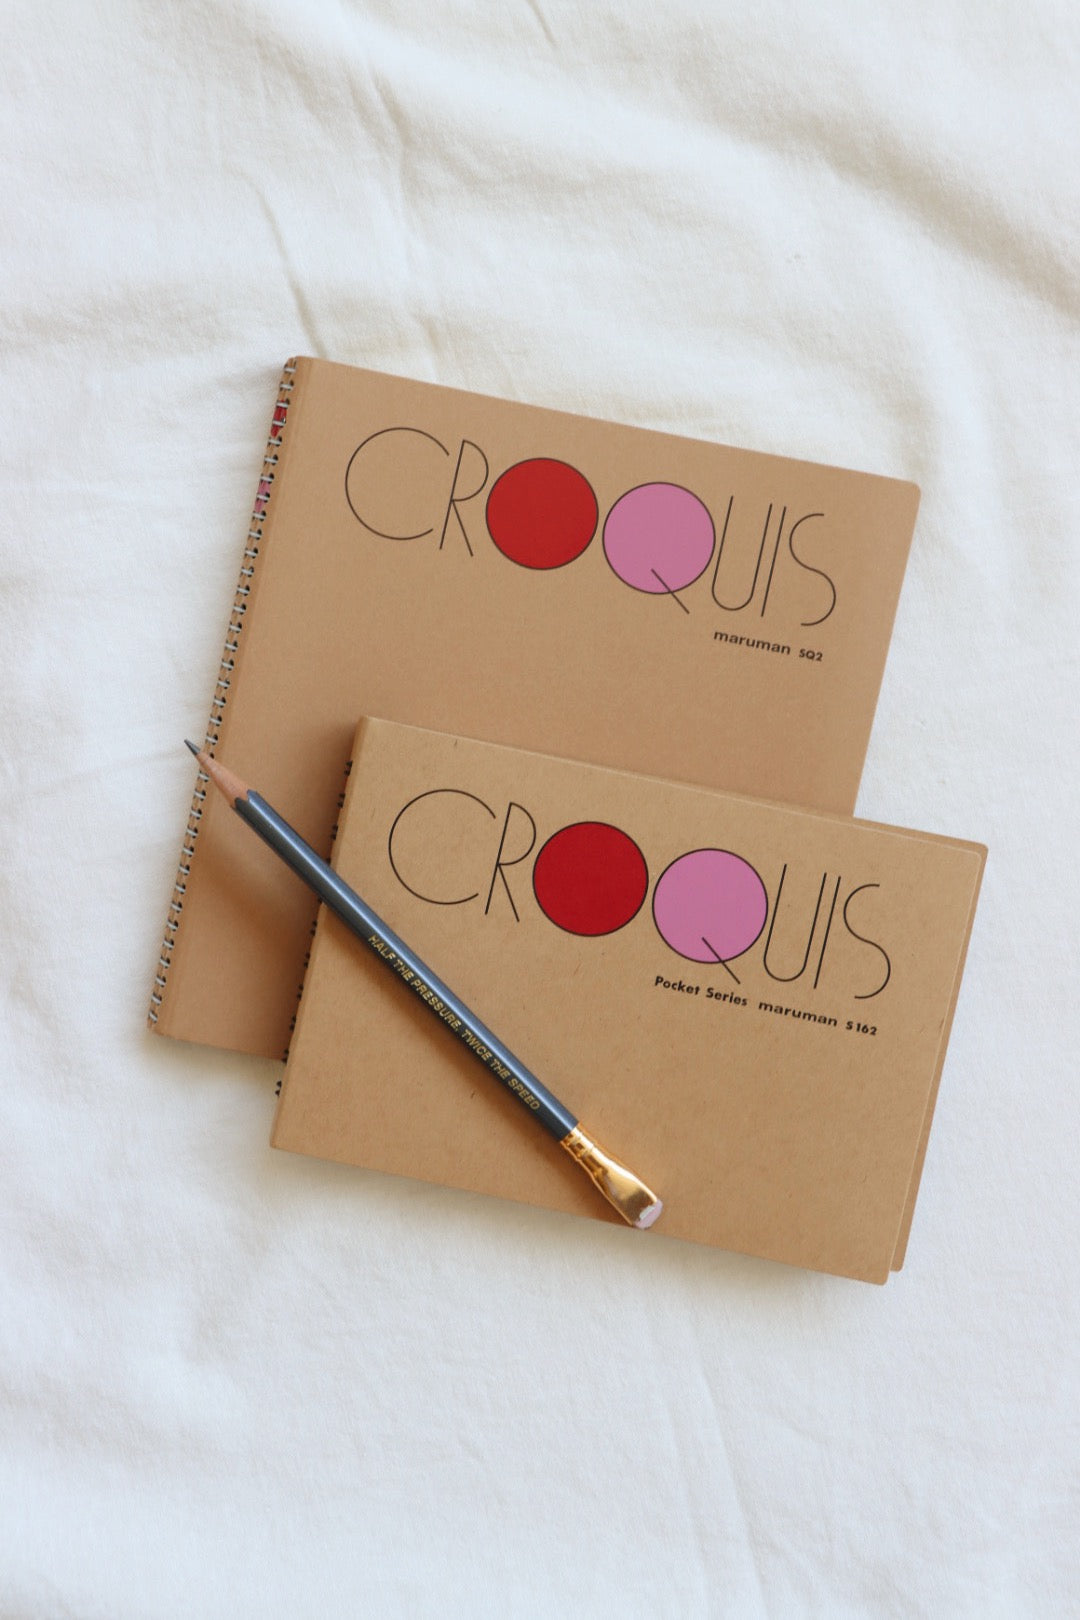 Croquis Pocket Sketch Book